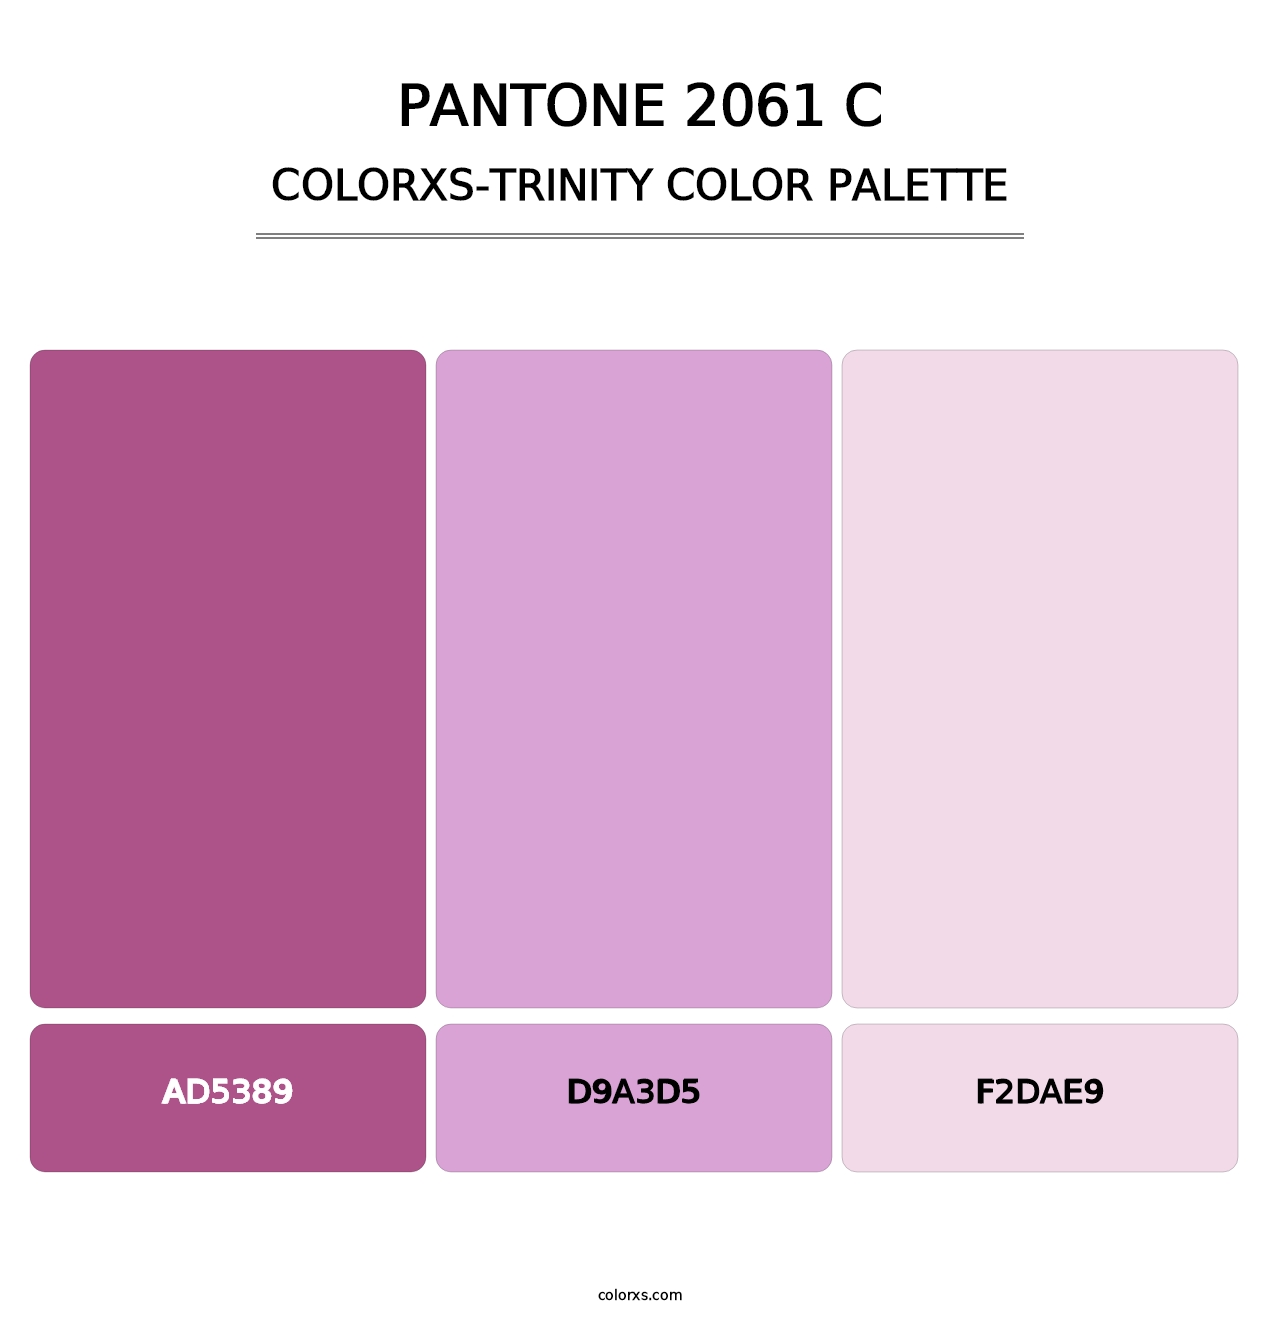 PANTONE 2061 C - Colorxs Trinity Palette